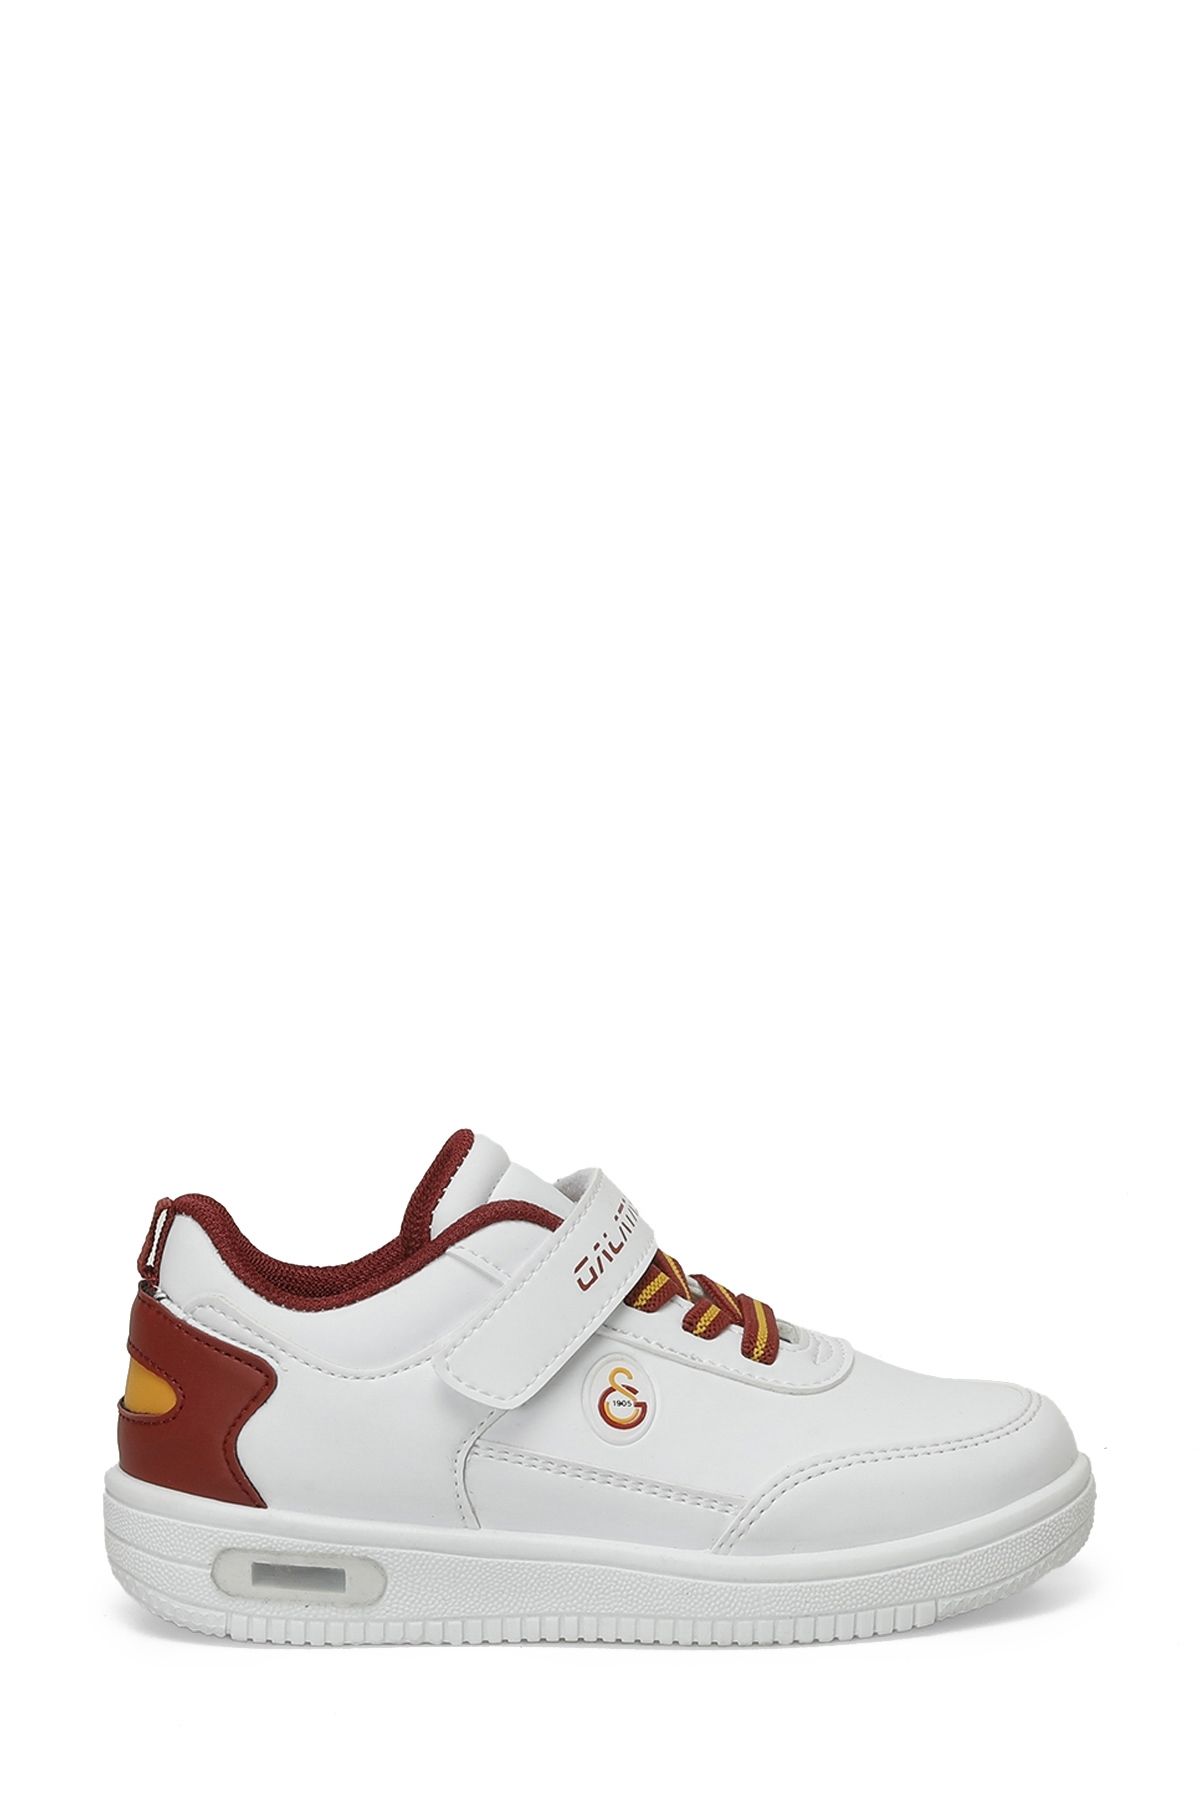 Galatasaray CENA PU  4FX Beyaz Erkek Çocuk Sneaker